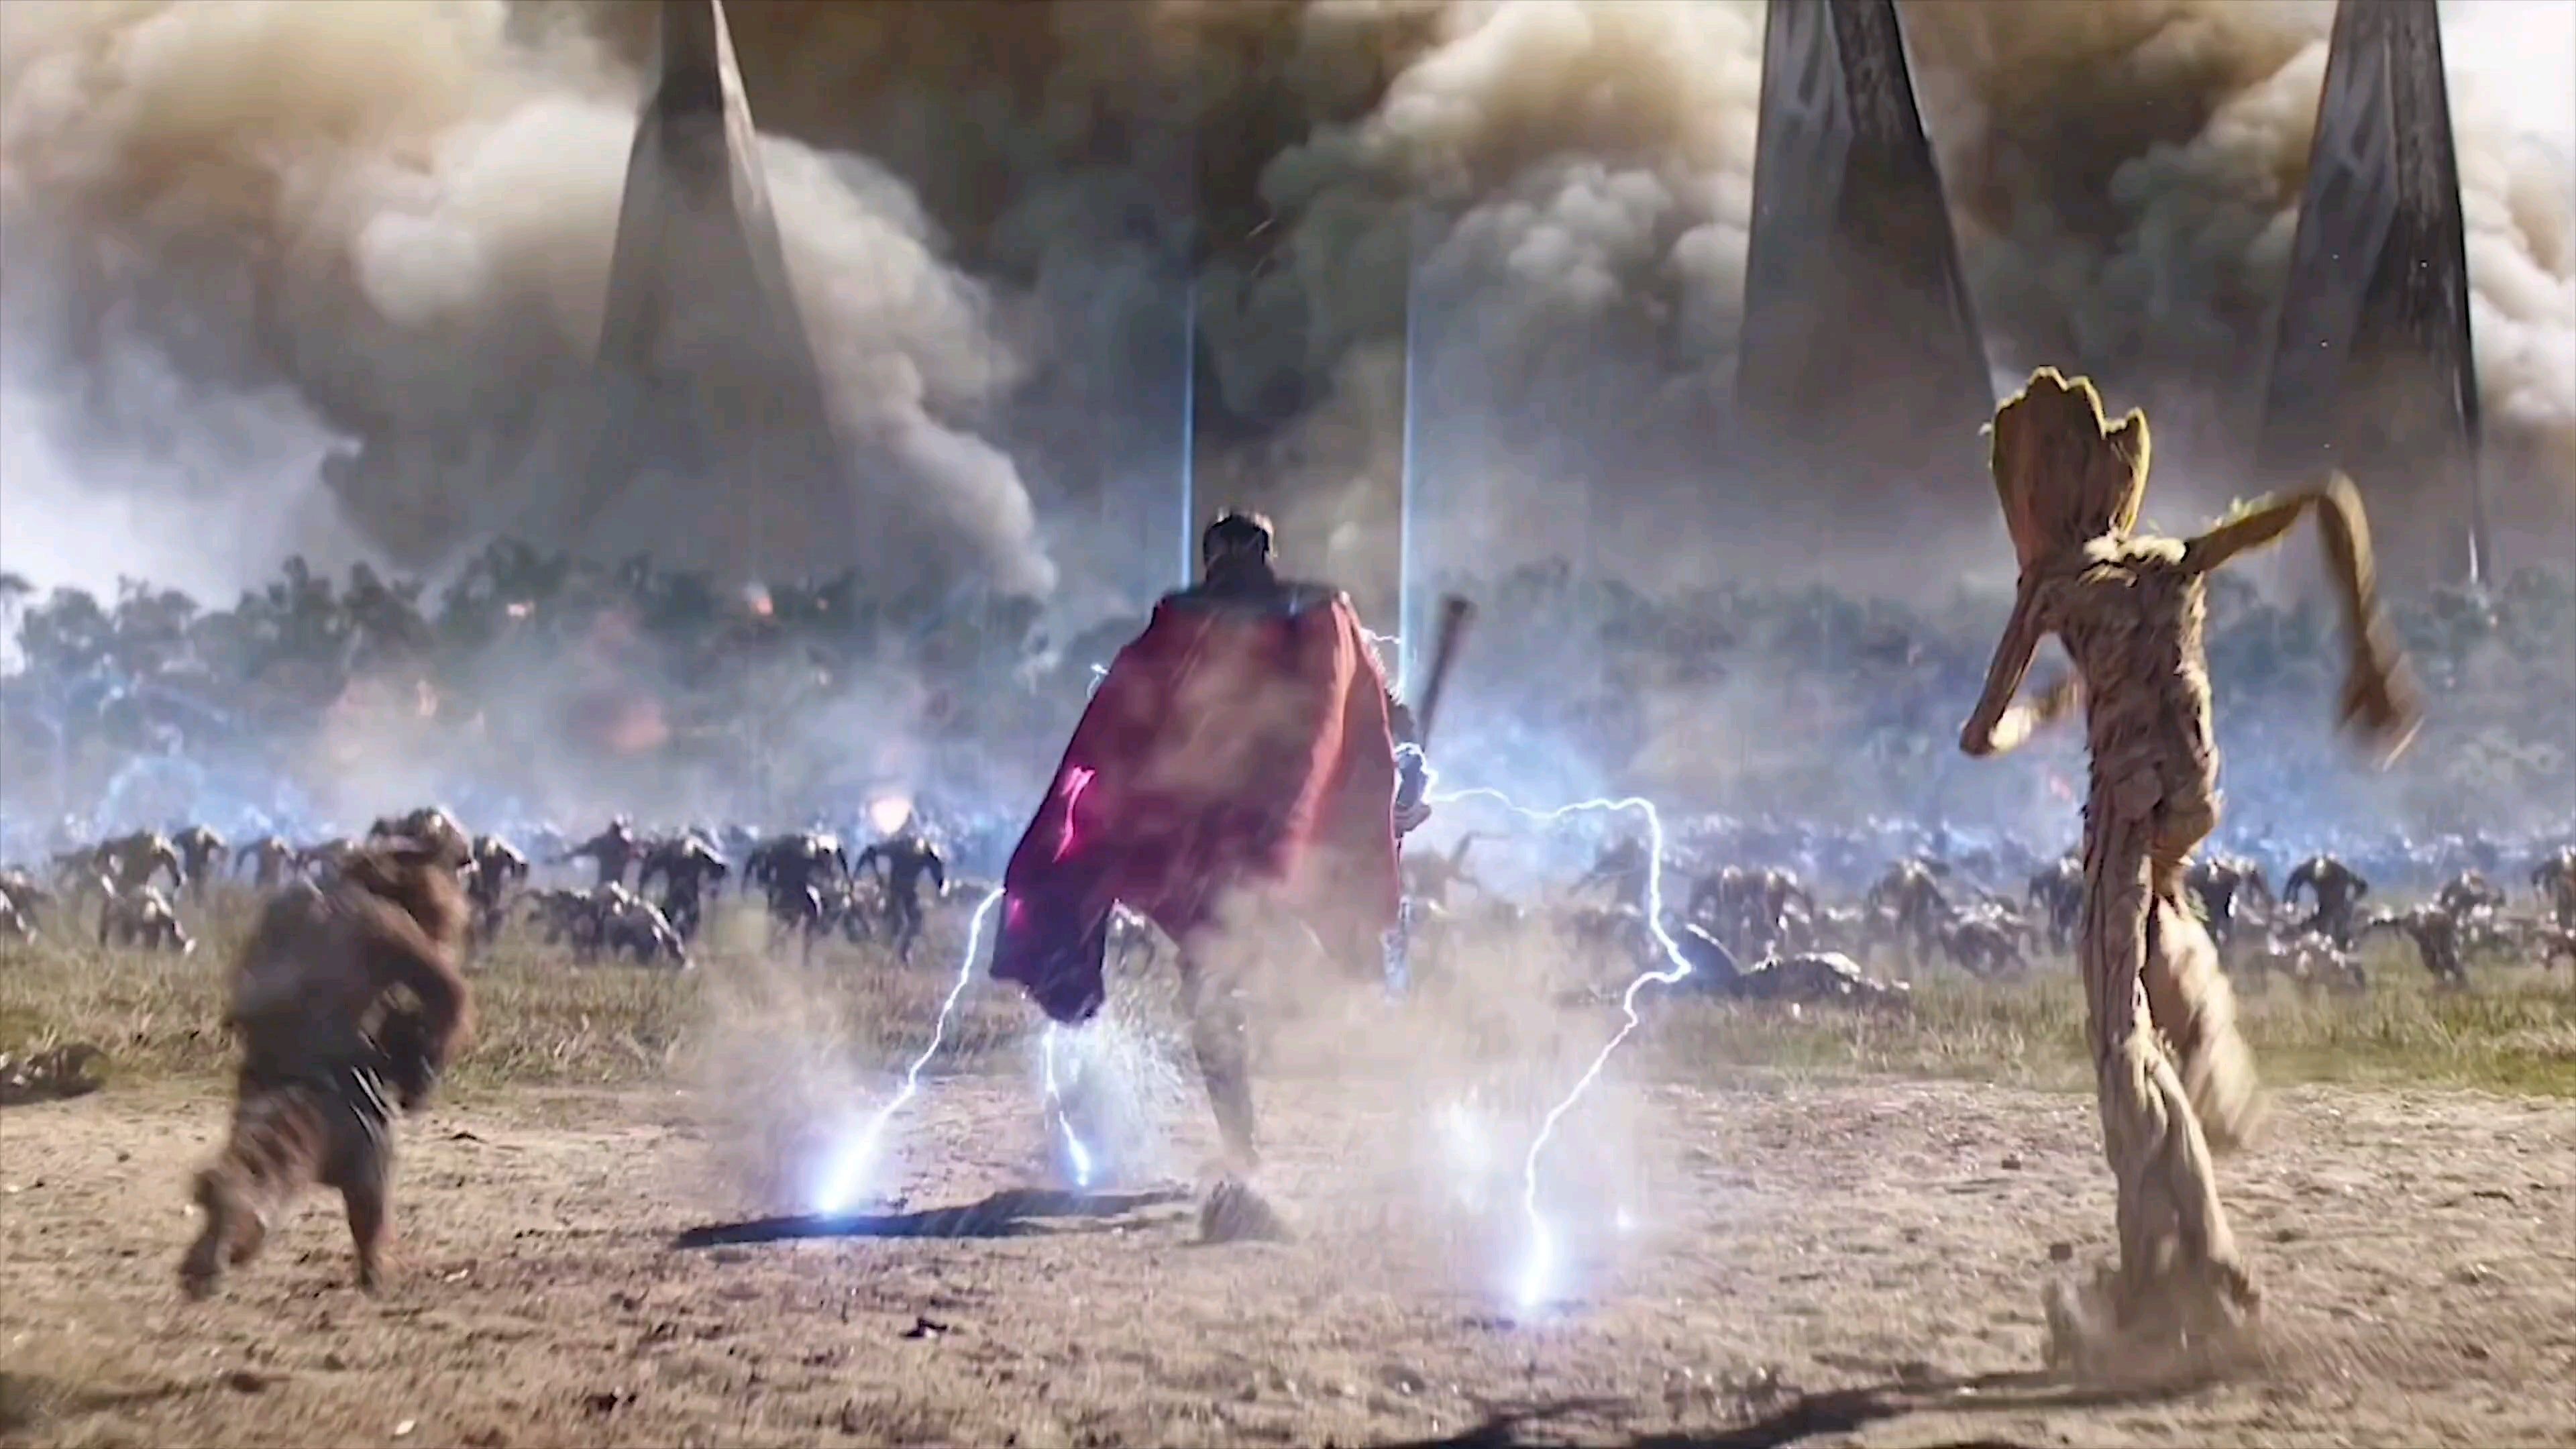 Thor arriving in Wakanda video wallpaper for Galaxy S10: marvelstudios